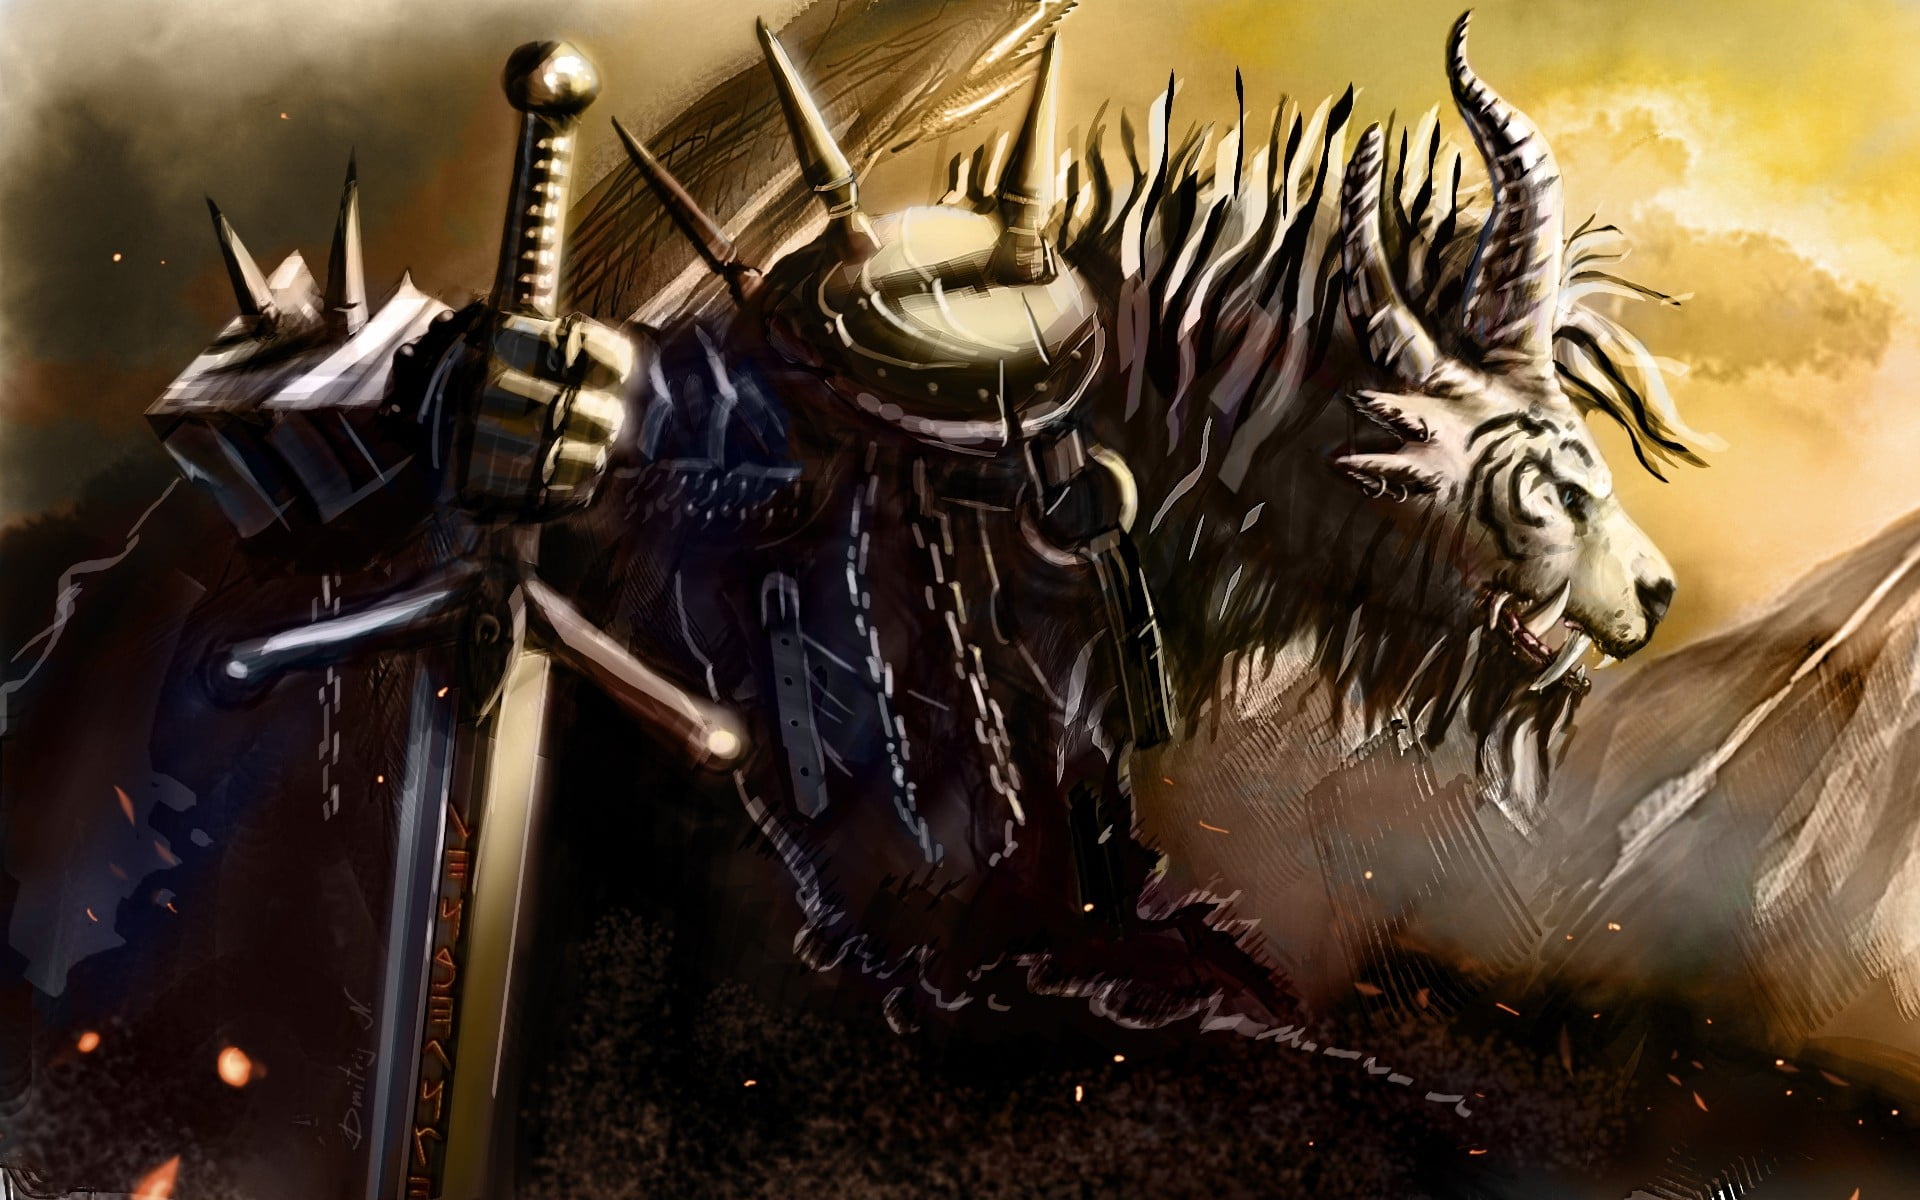 warrior holding gray sword 3D wallpaper, fantasy art, concept art, Guild Wars, Guild Wars 2